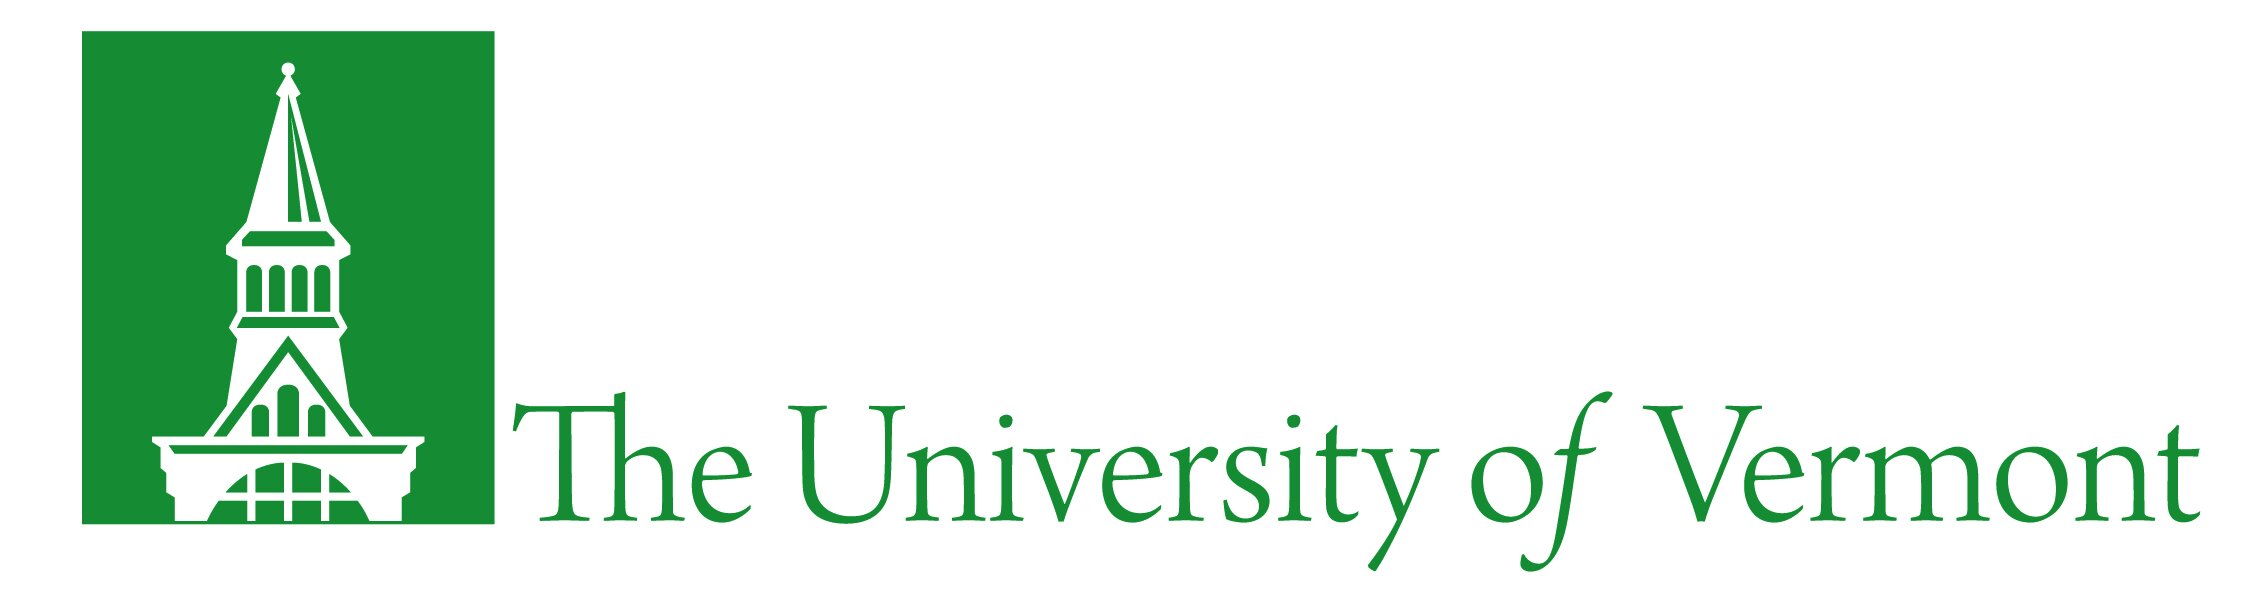 The_University_of_Vermont_logo.jpg